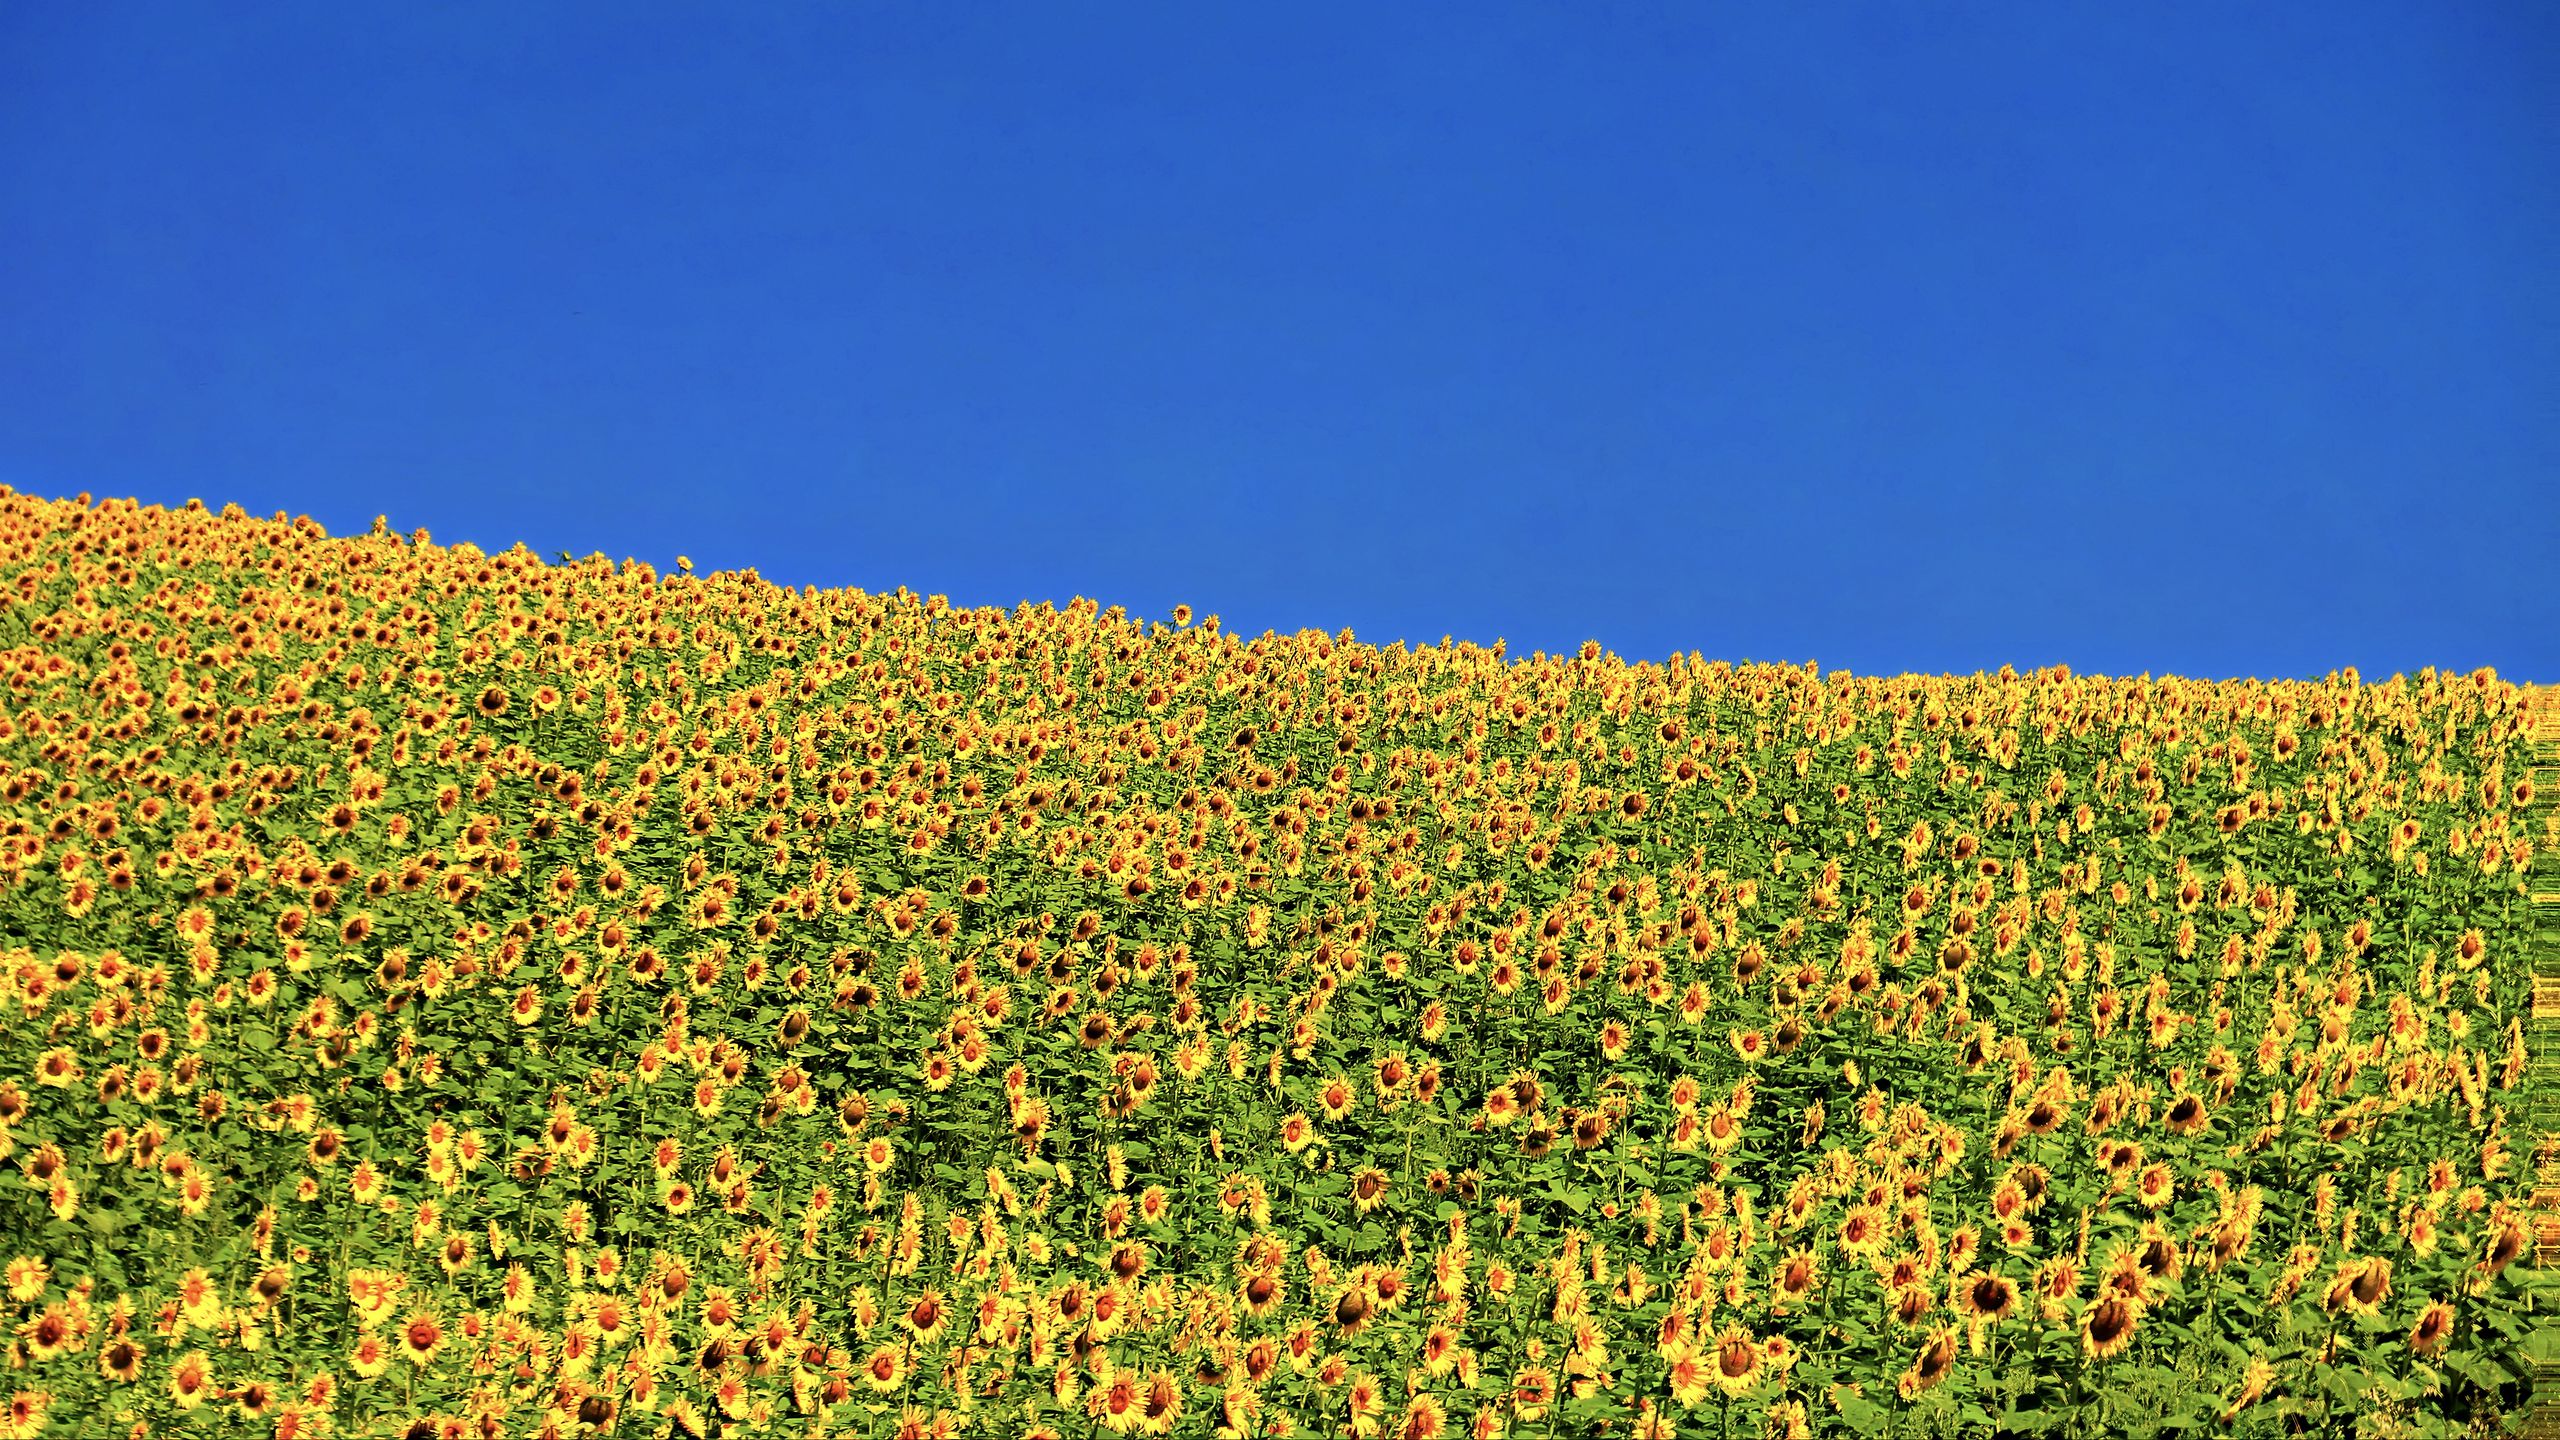 Download Wallpaper 2560x1440 Sunflowers Flowers Field Widescreen 169